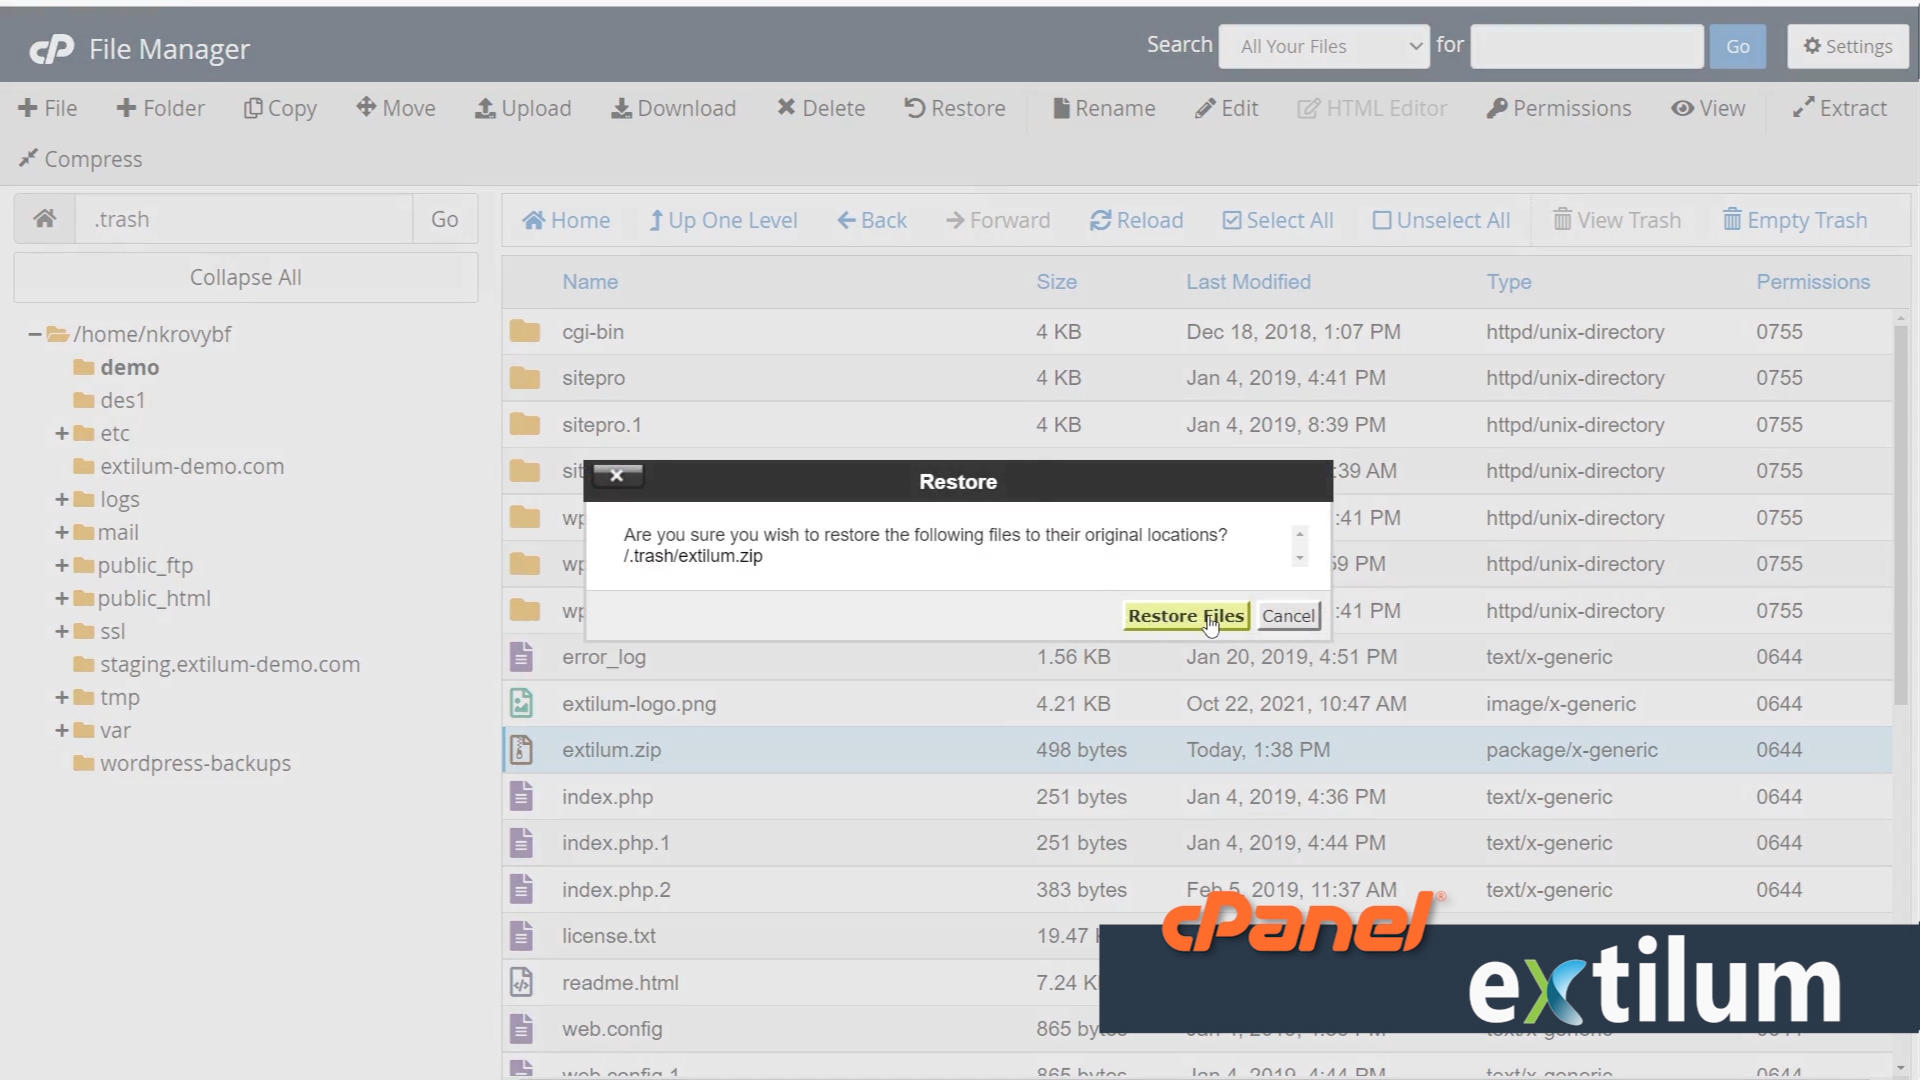 Extilum cPanel - File Manager - delete and restore